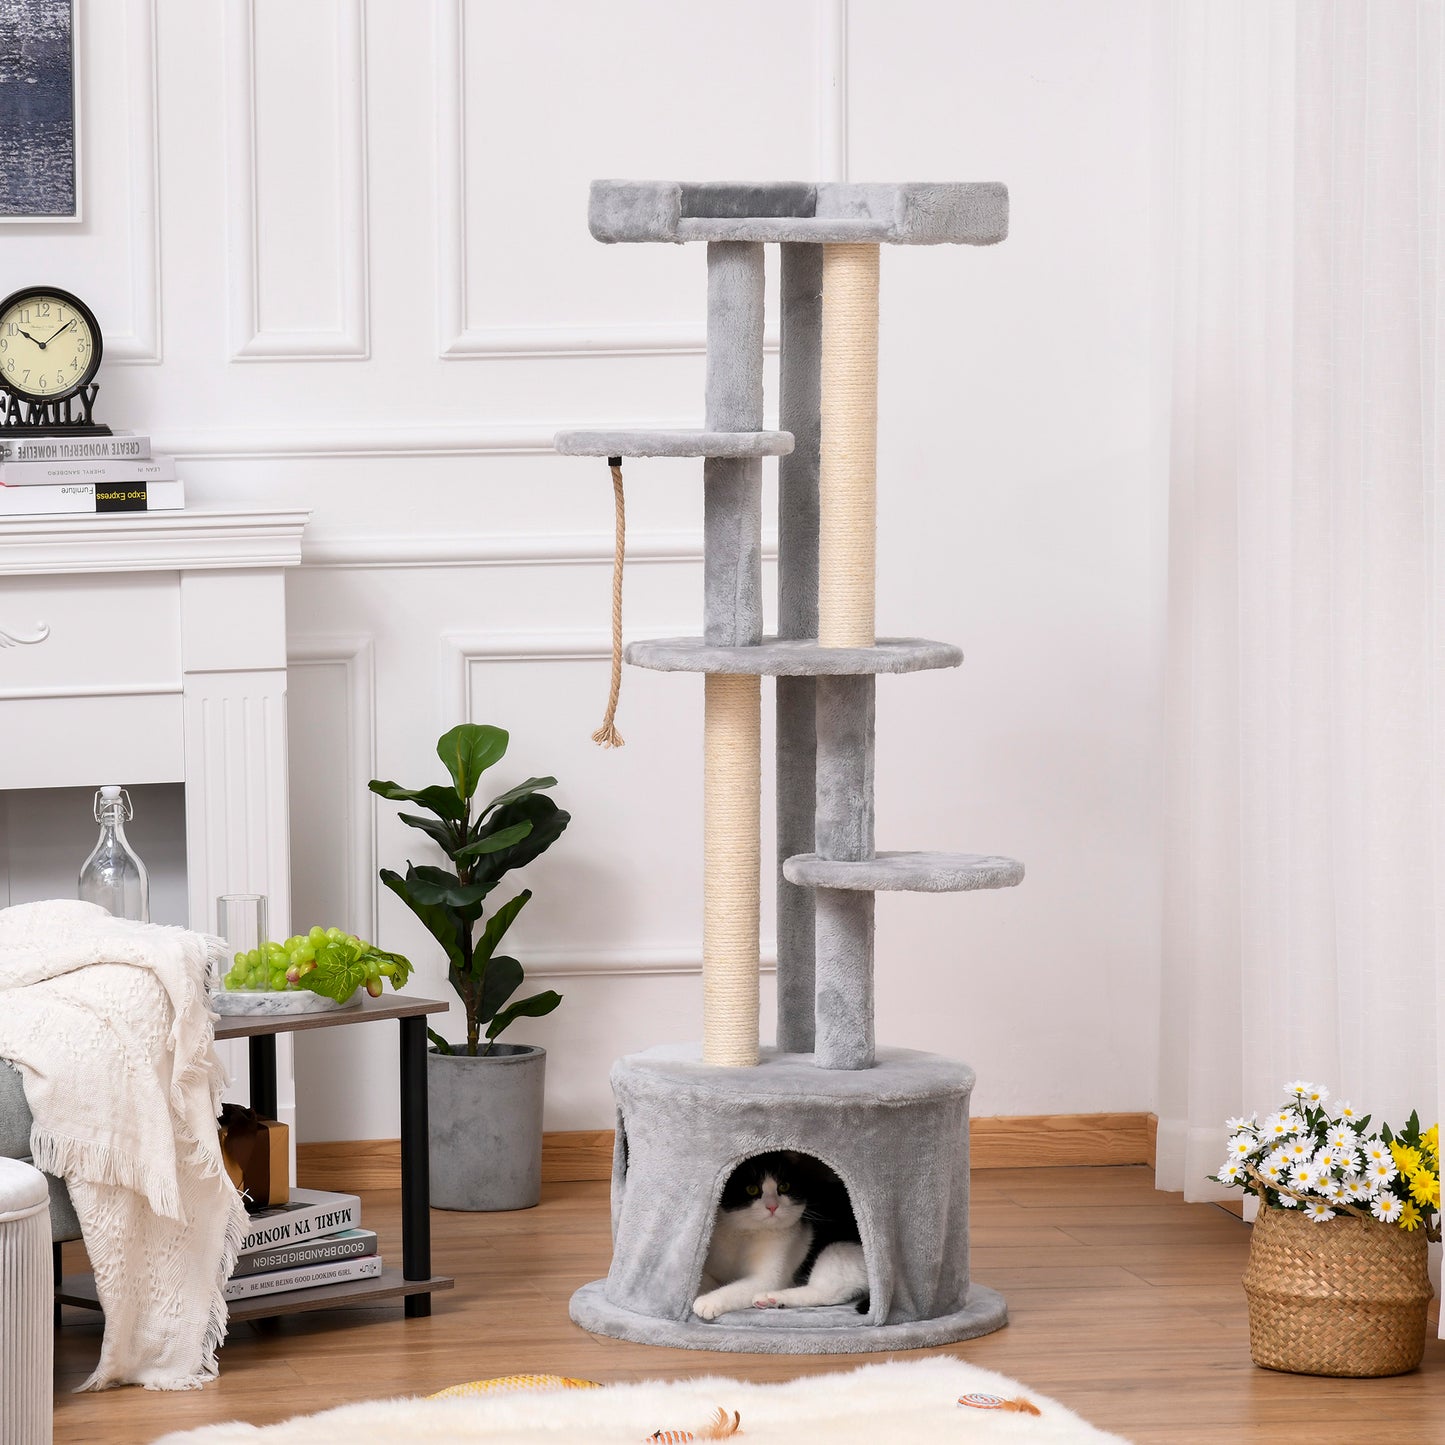 PawHut Φ55 x 150H cm Cat Tree Multi-level Kitten Tower w/ Scratching Post Condo Plush Perches Grey